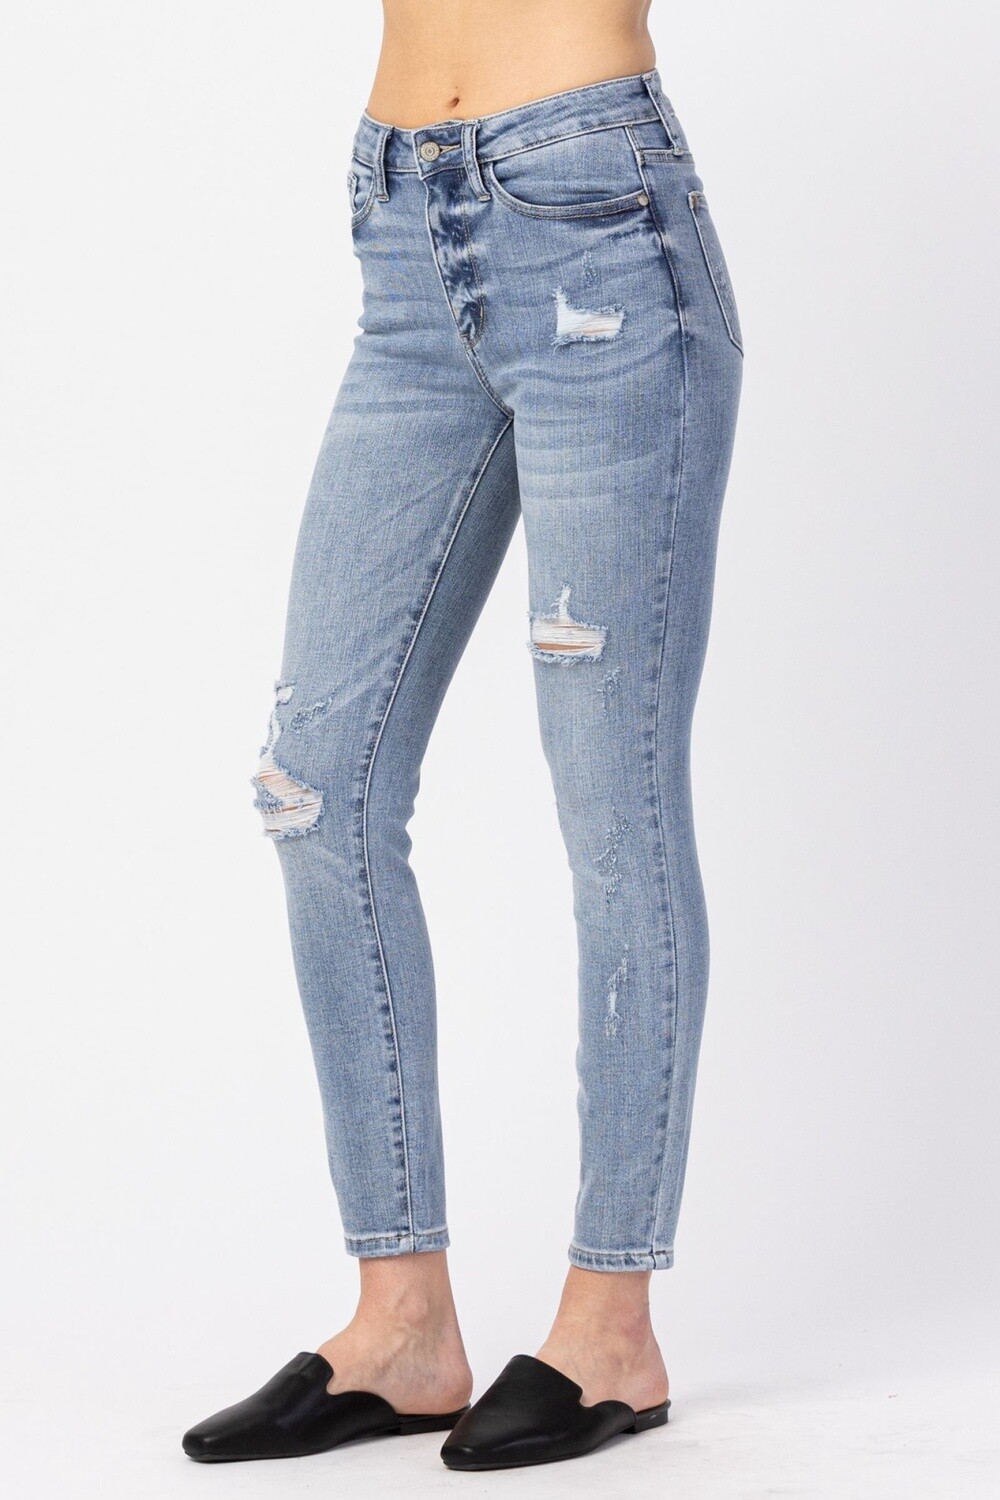 Women's Distressed Skinny Jeans #82330